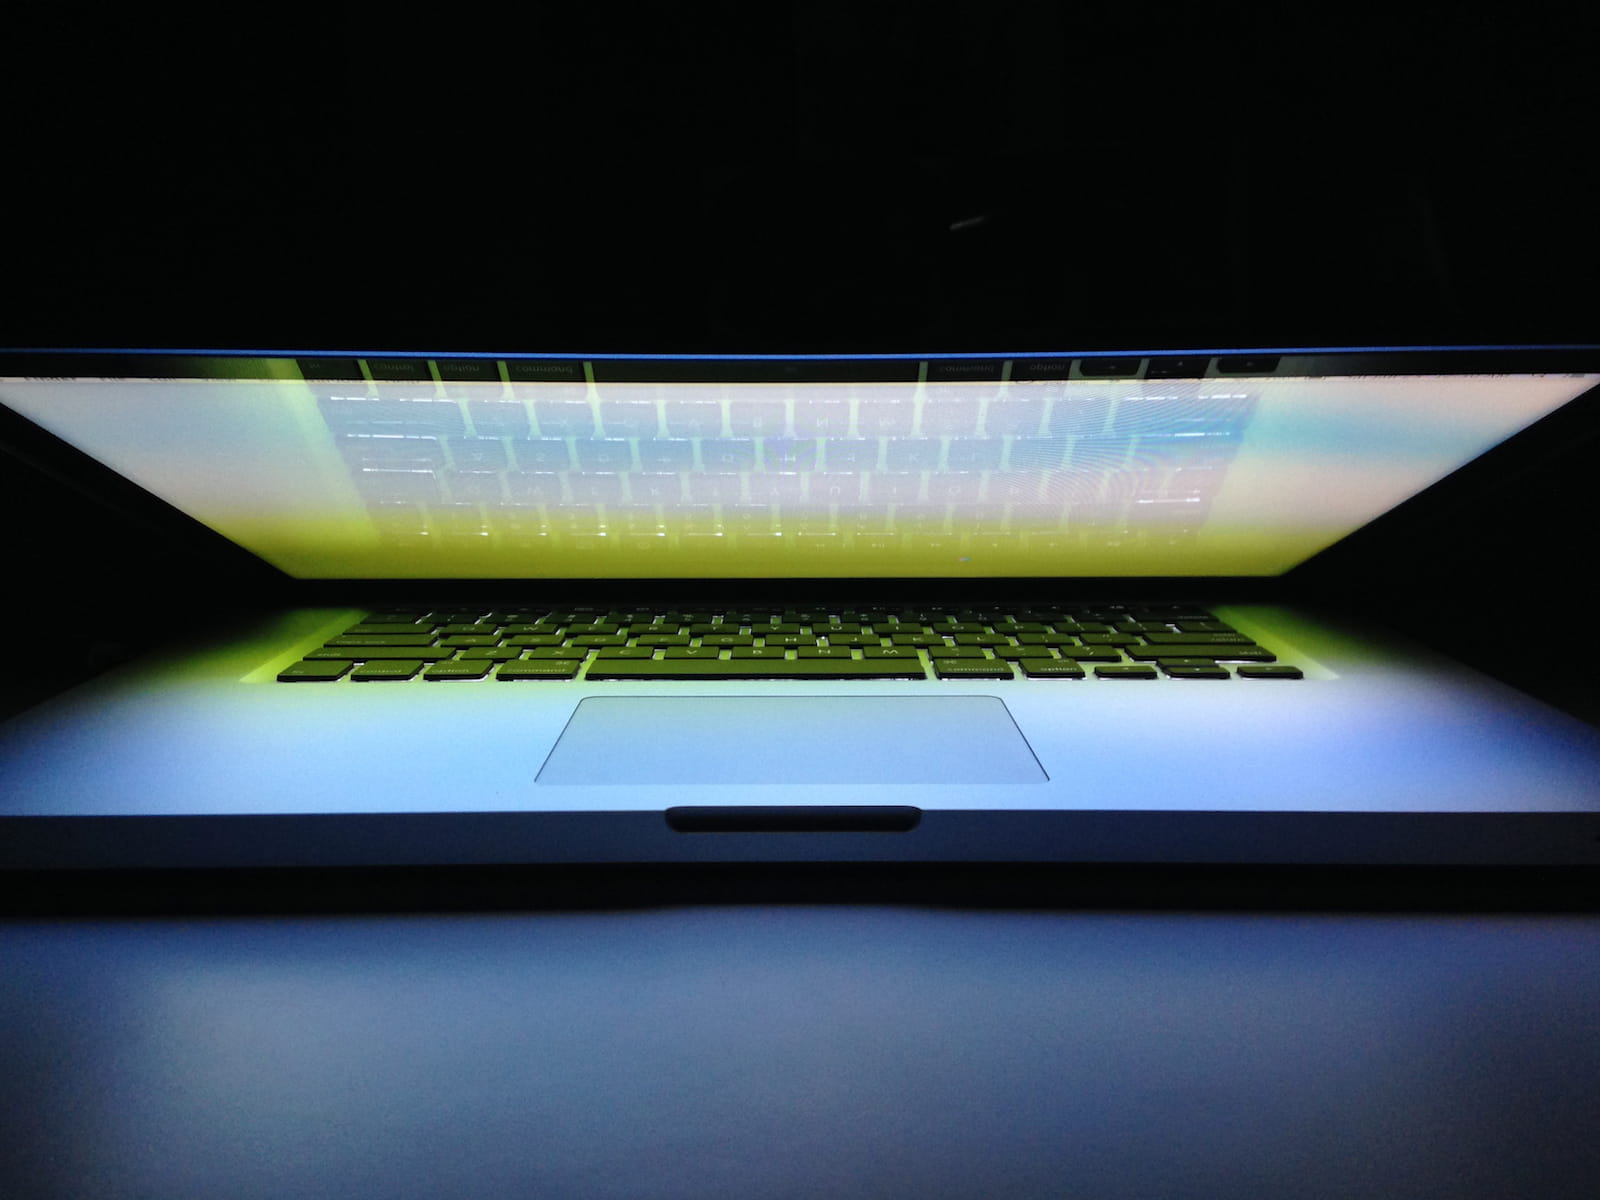 Laptop backlight glowing brightly in a dark room